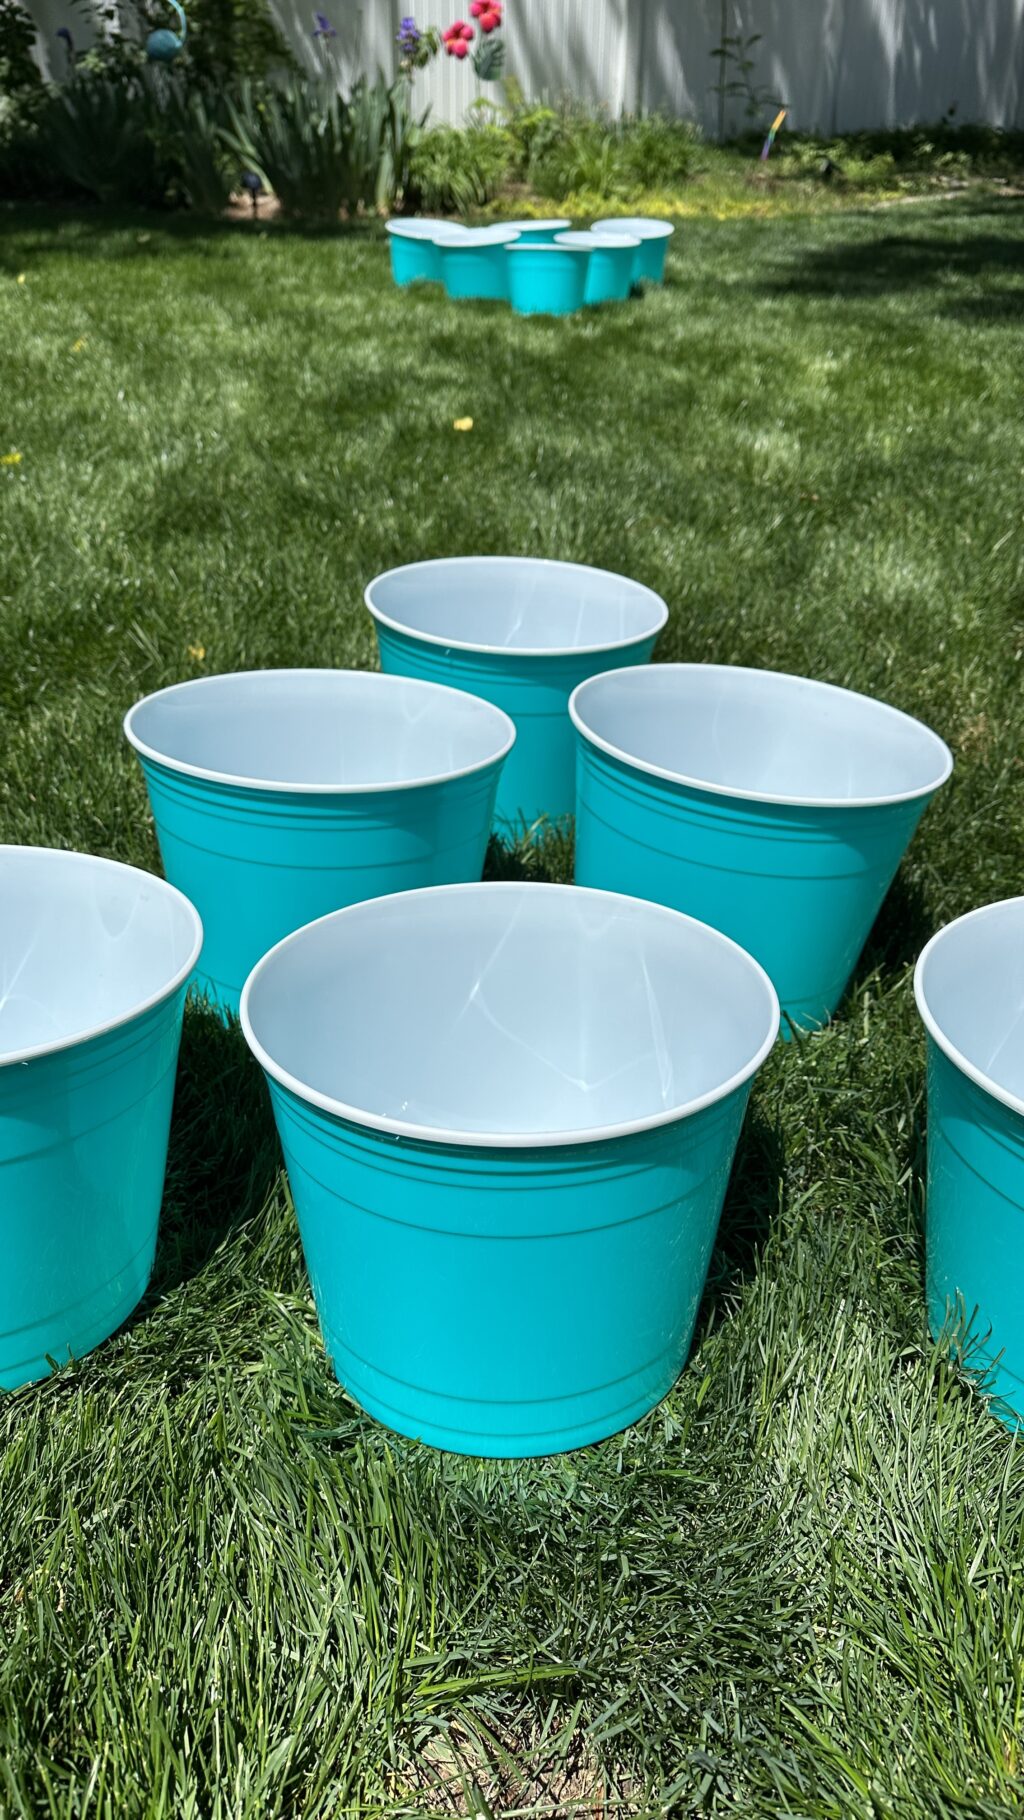 giant aqua yard pong buckets set up in grass